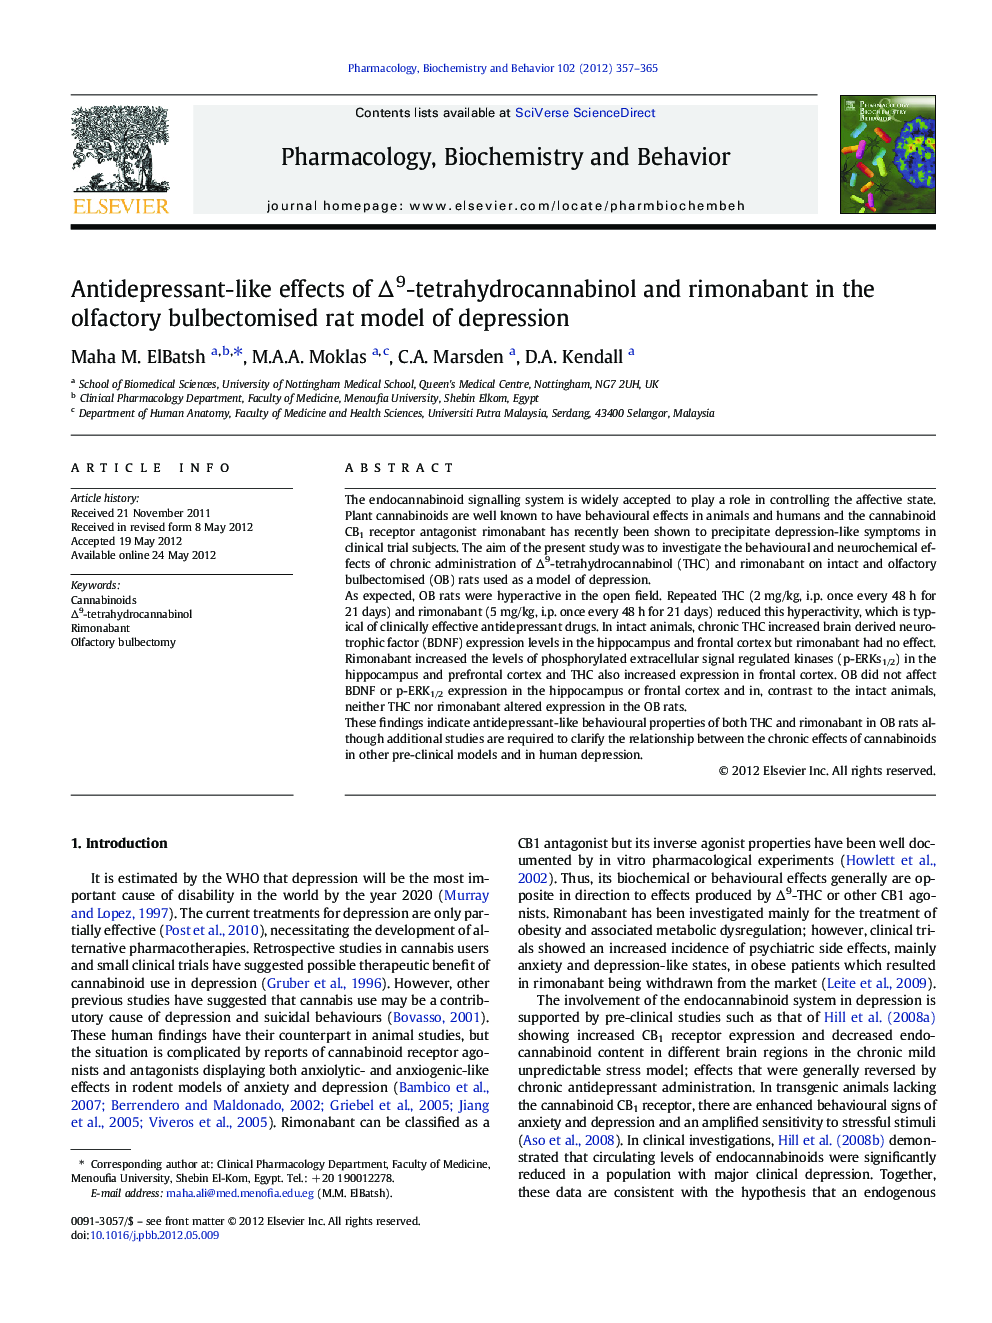 Antidepressant-like effects of Î9-tetrahydrocannabinol and rimonabant in the olfactory bulbectomised rat model of depression